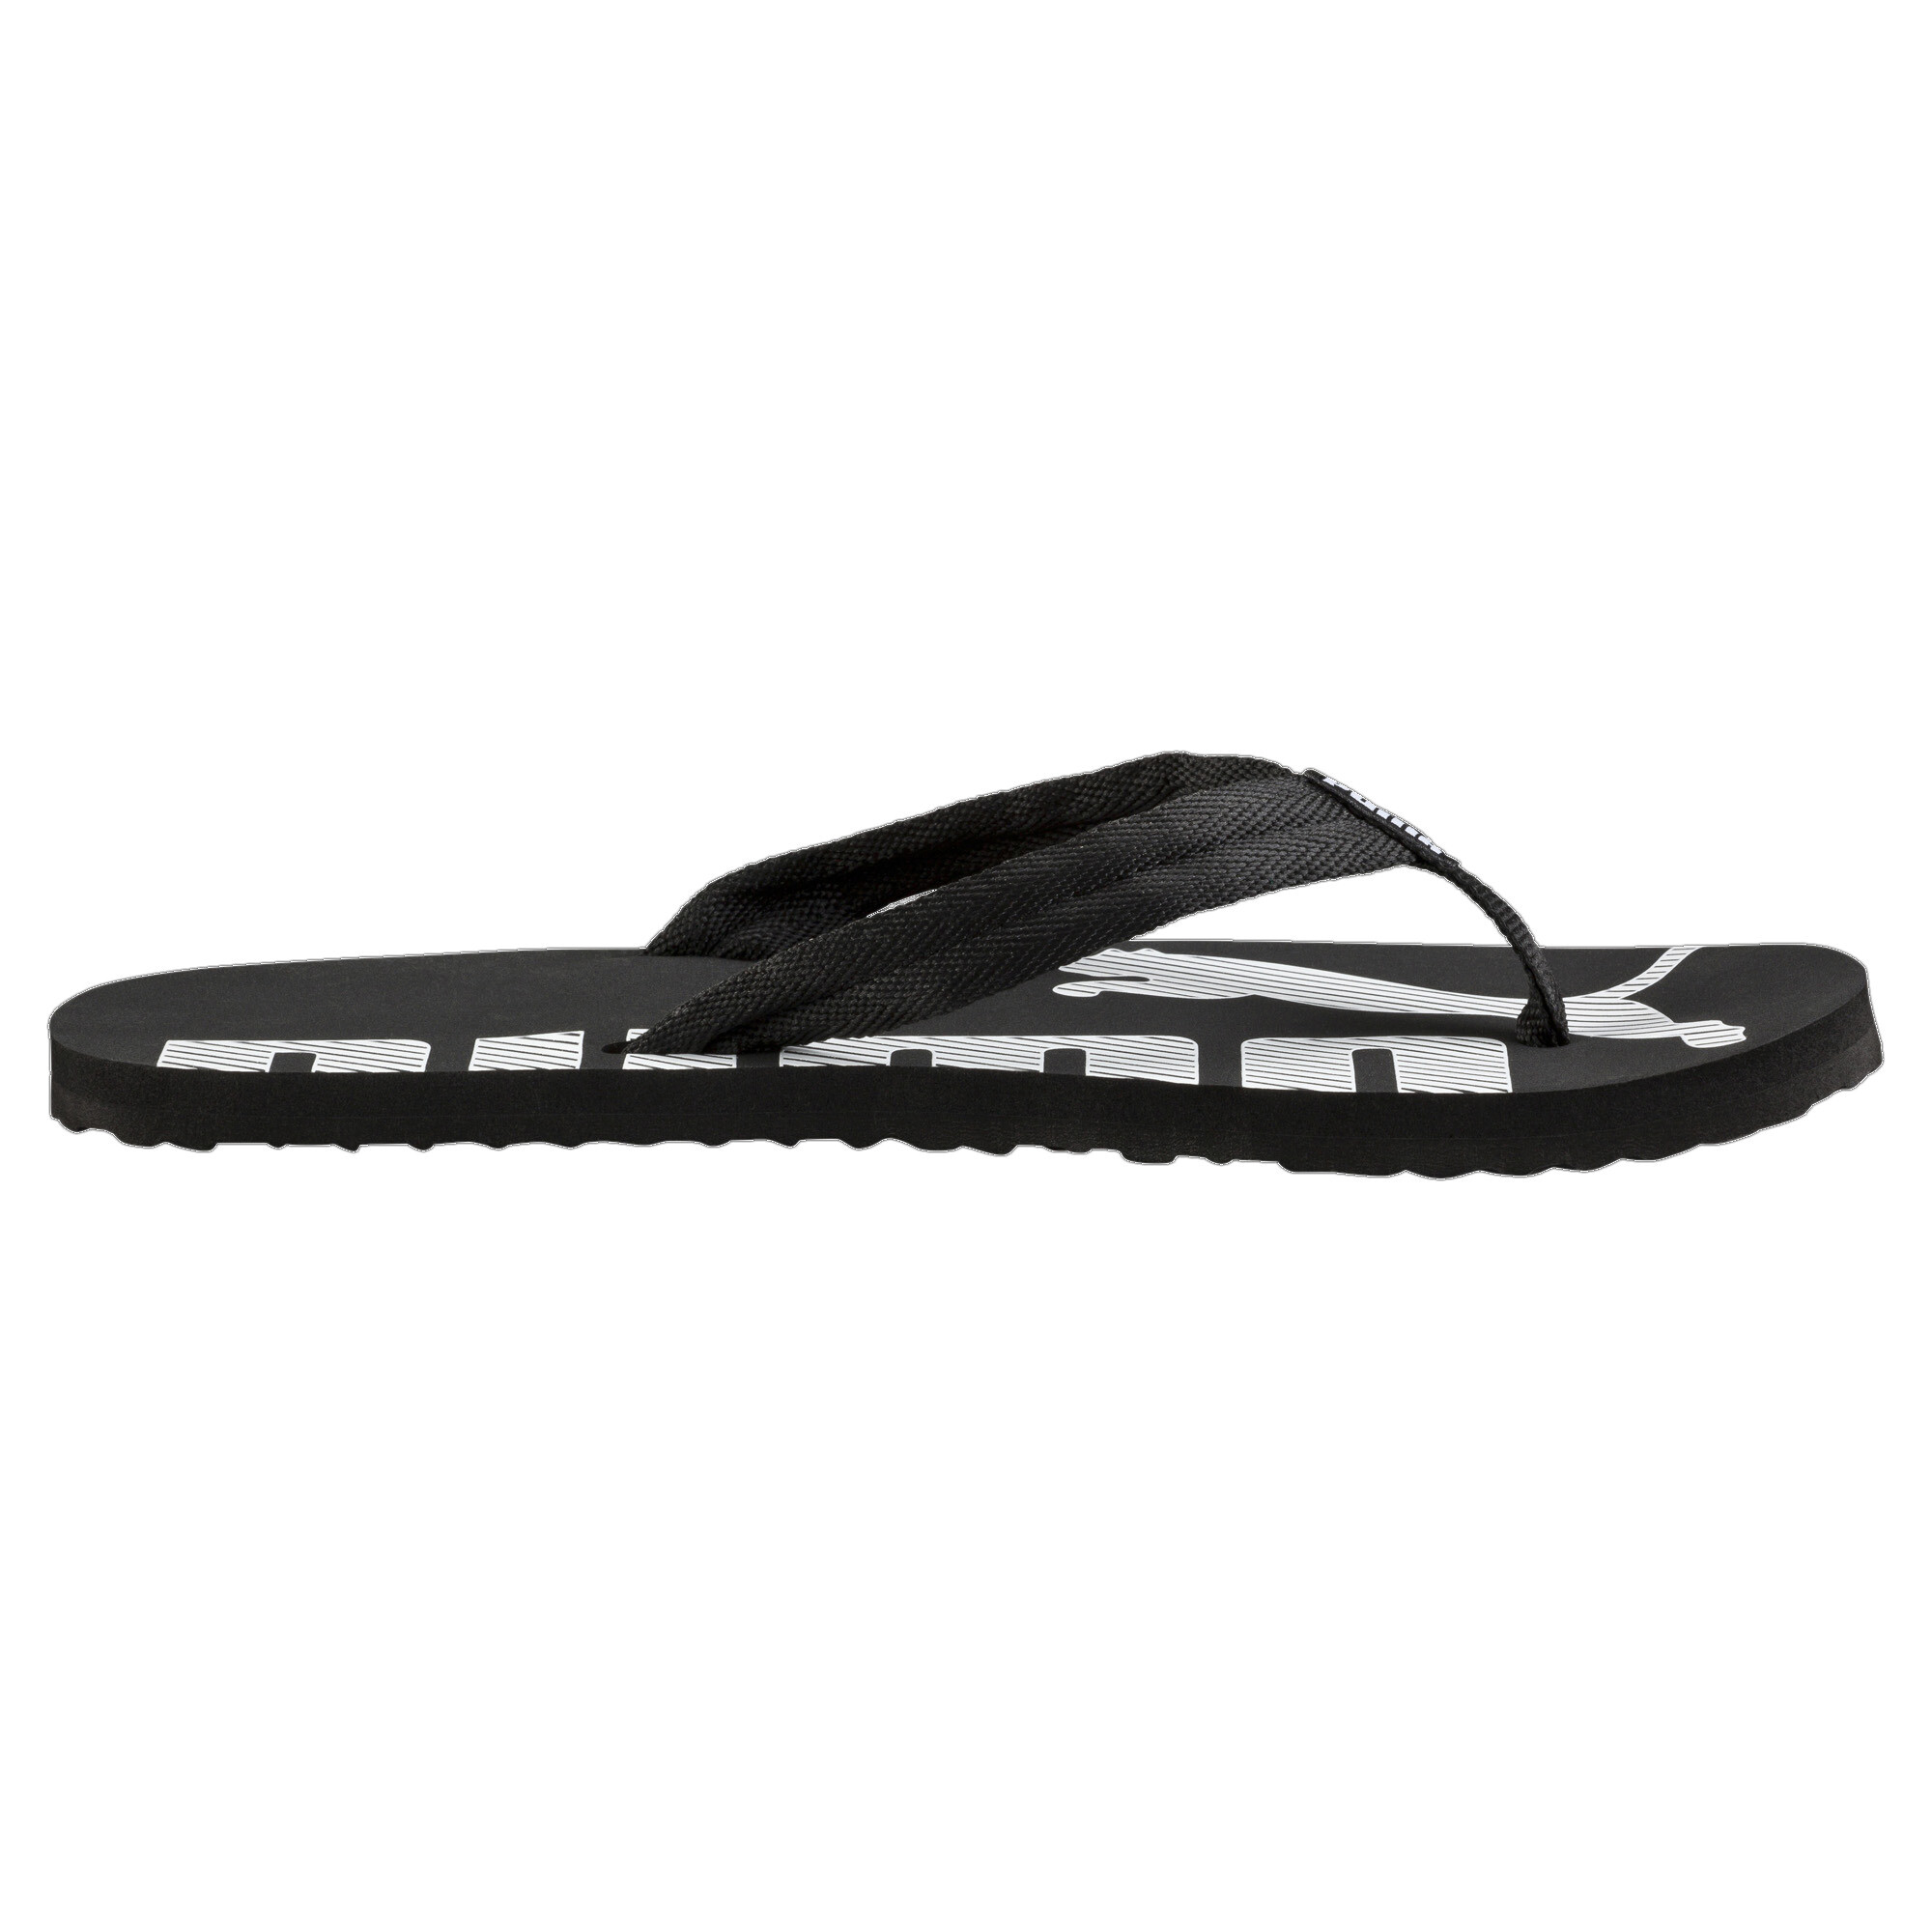 Men's PUMA Epic Flip V2 Sandals In Black, Size EU 47